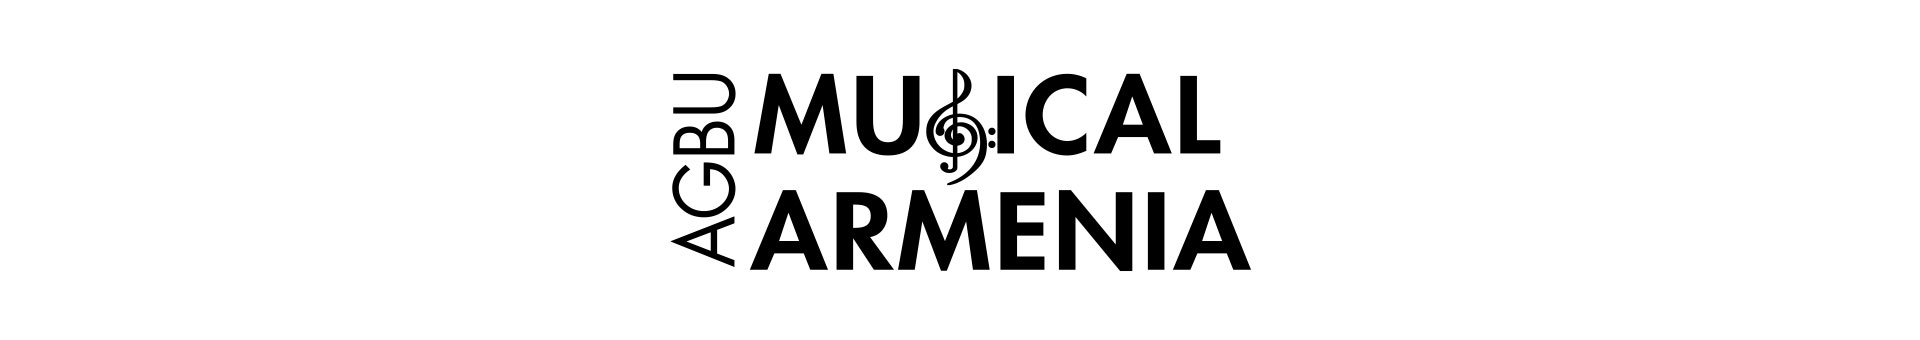 AGBU Musical Armenia